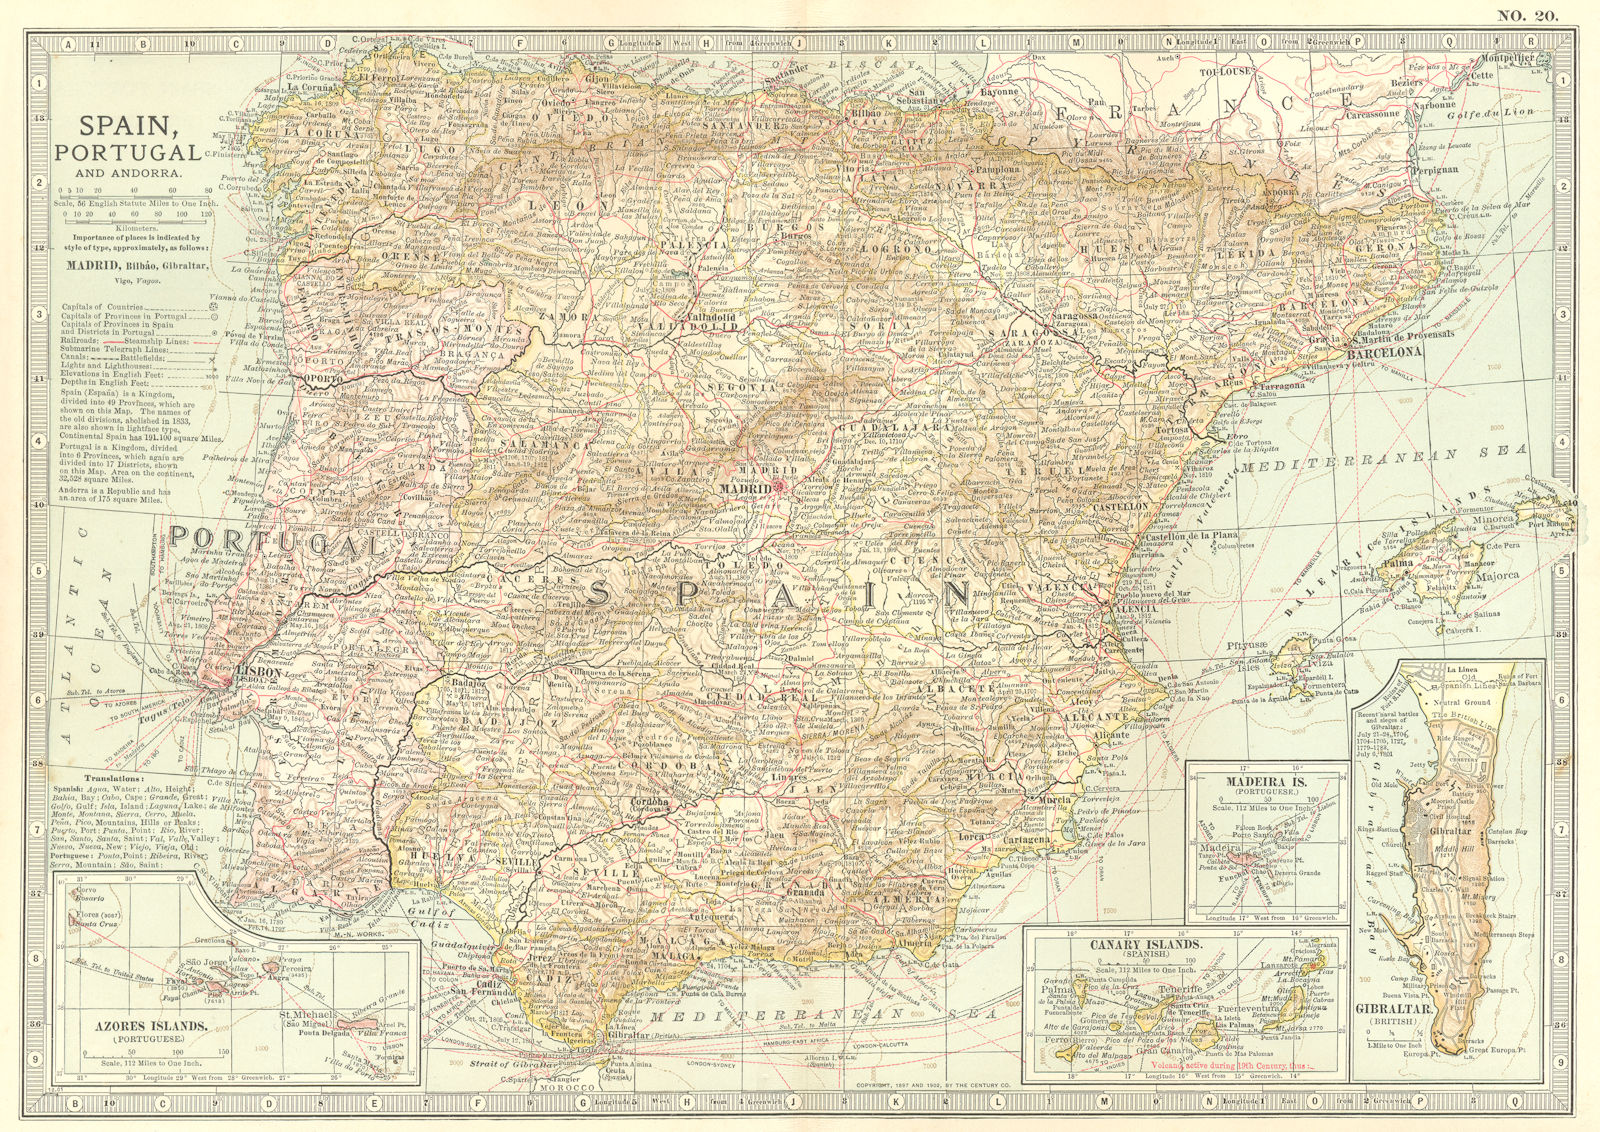 IBERIA. Spain, Portugal; Azores, Canary, Balearic; Madeira; Gibraltar 1903 map